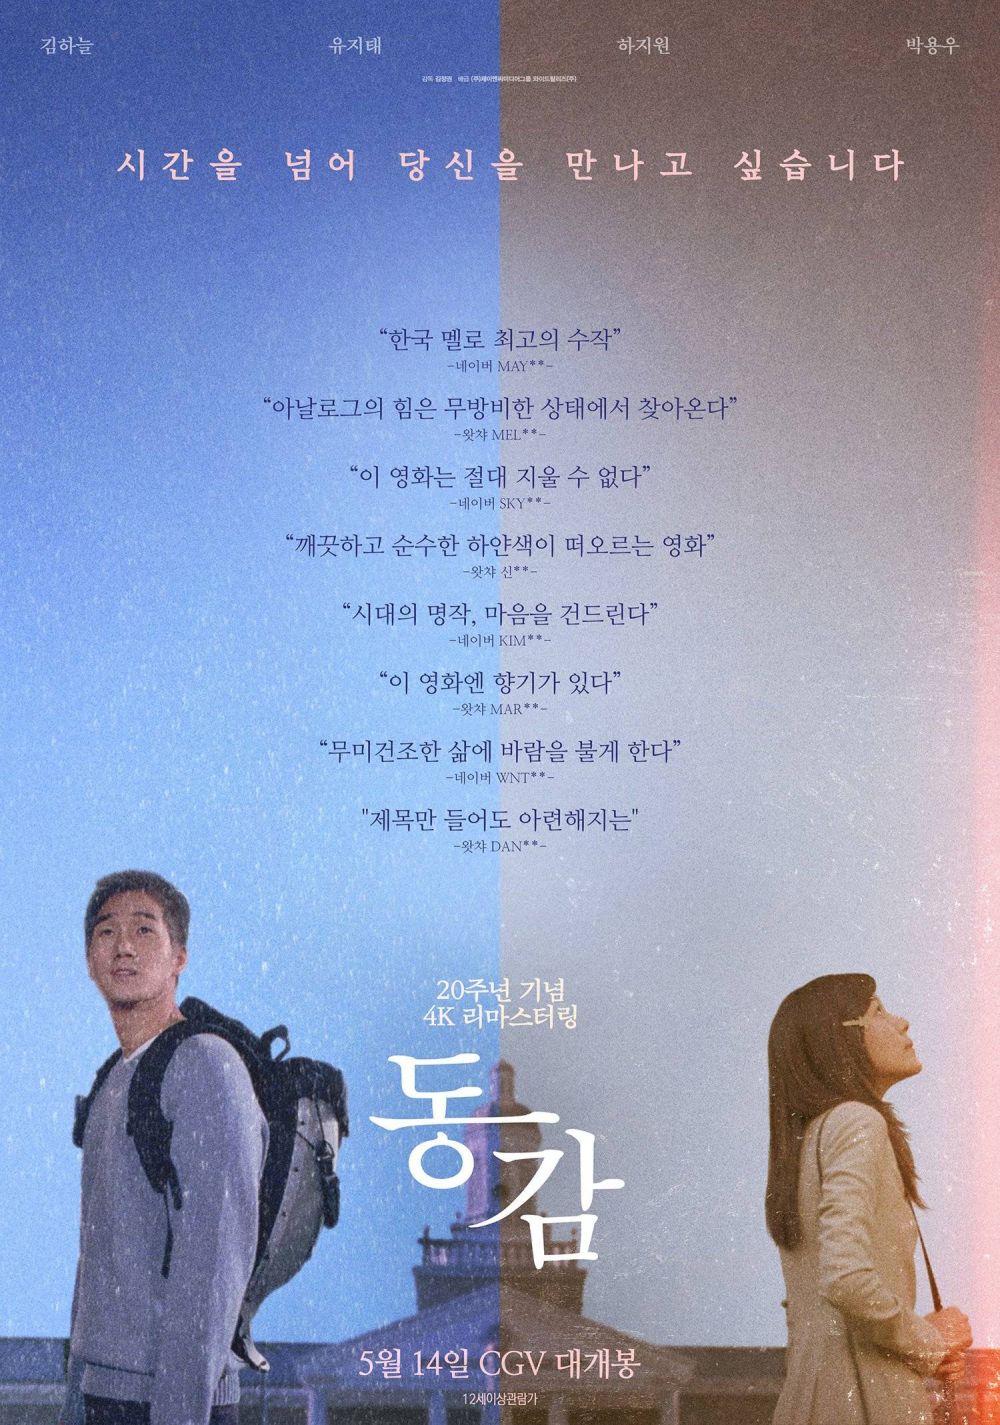 5 Fakta Film Agreement, Duet Yeo Jin Goo dan Jo Yi Hyun